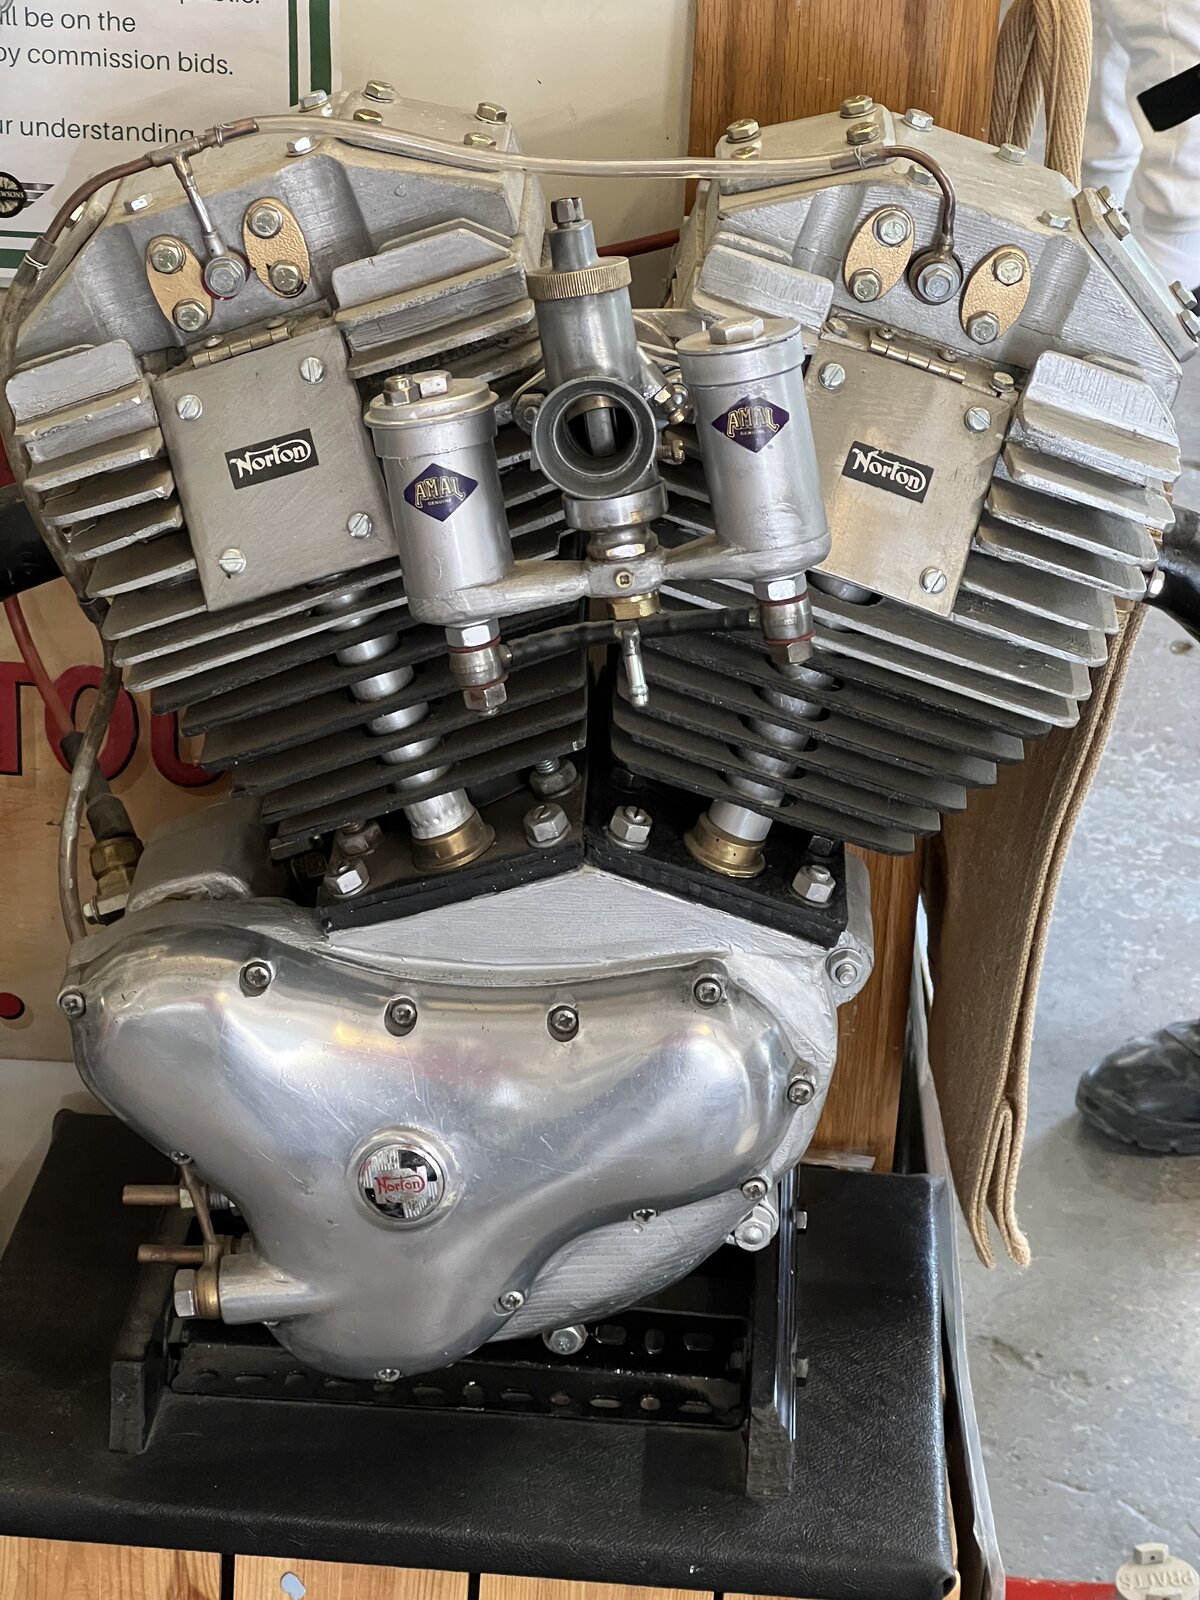 It’s a Norton engine?